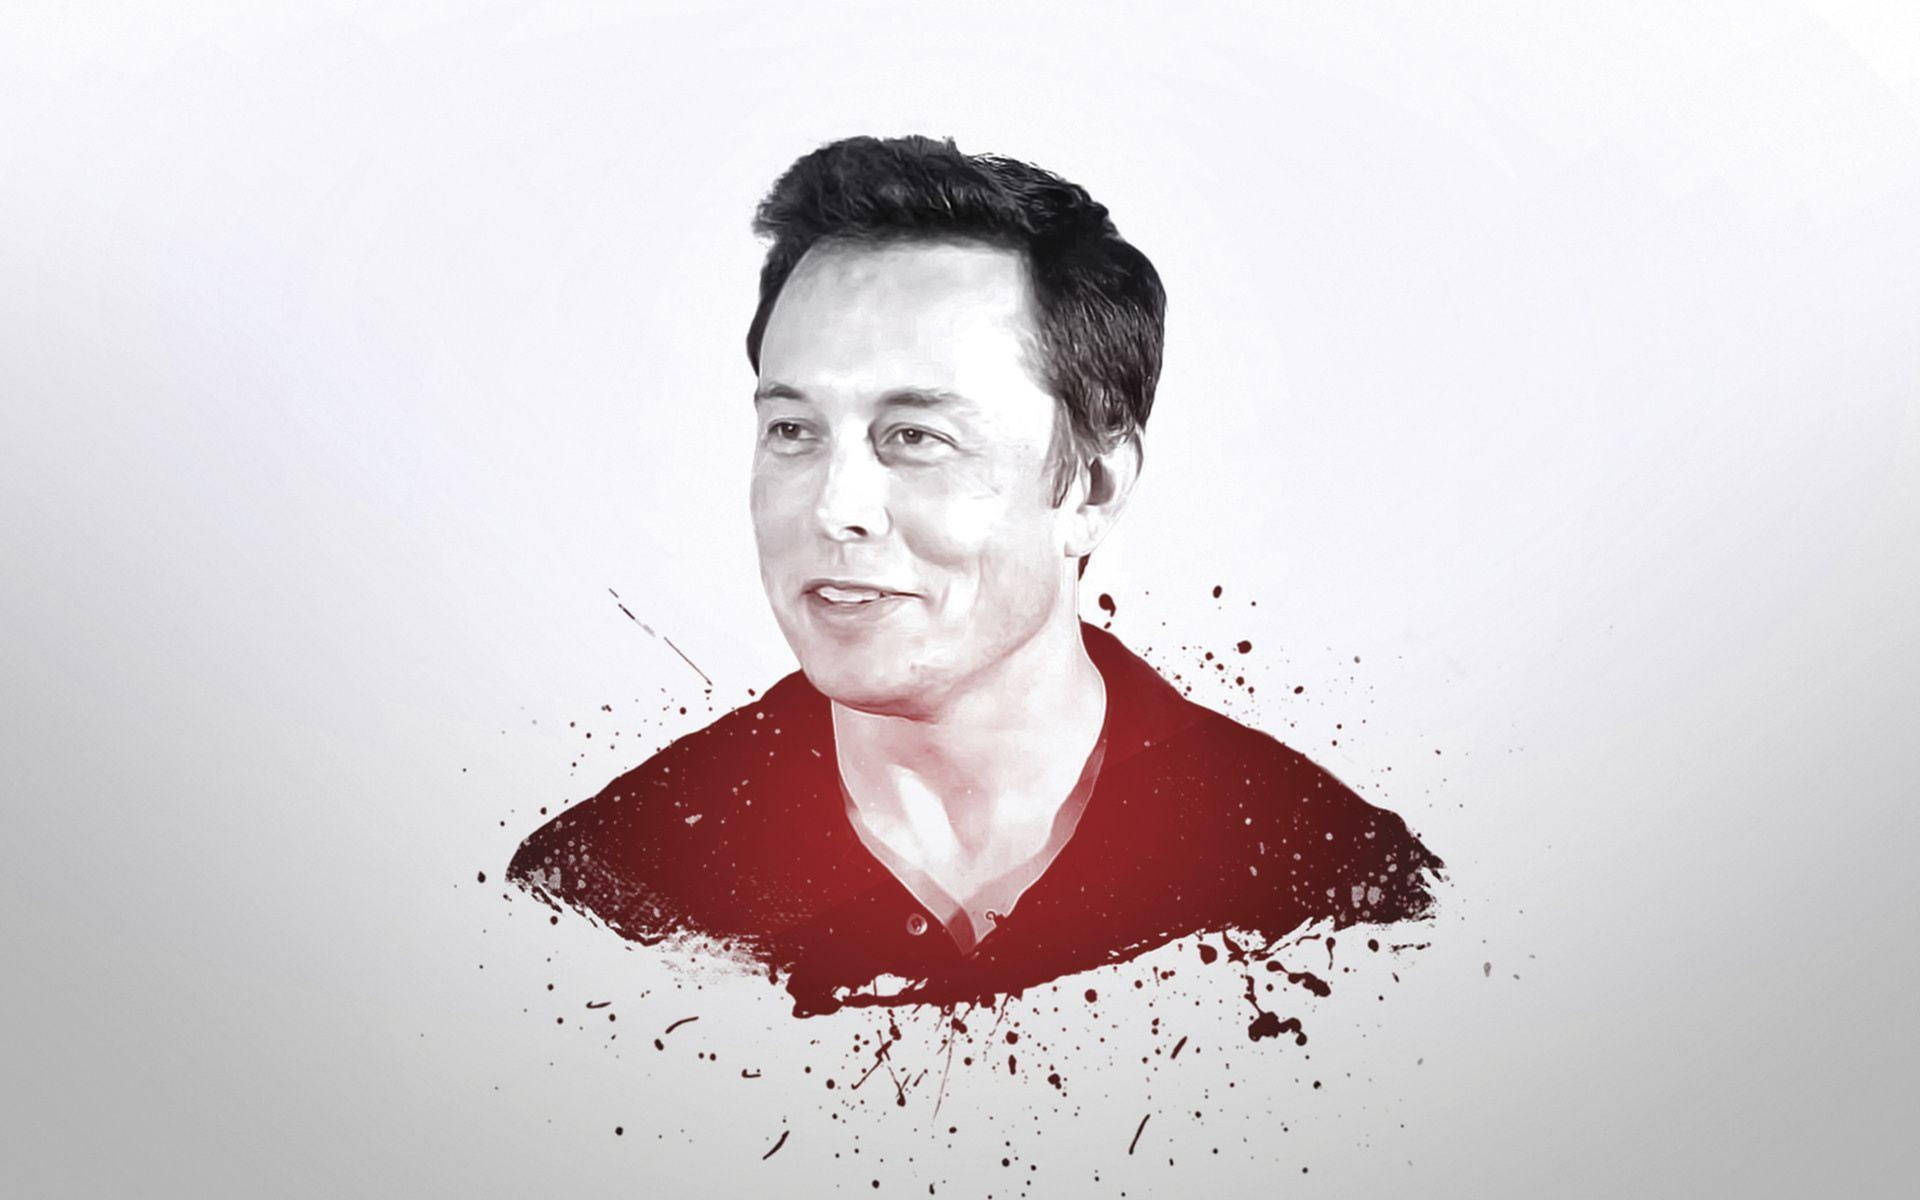 Elon Musk Abstract Portrait